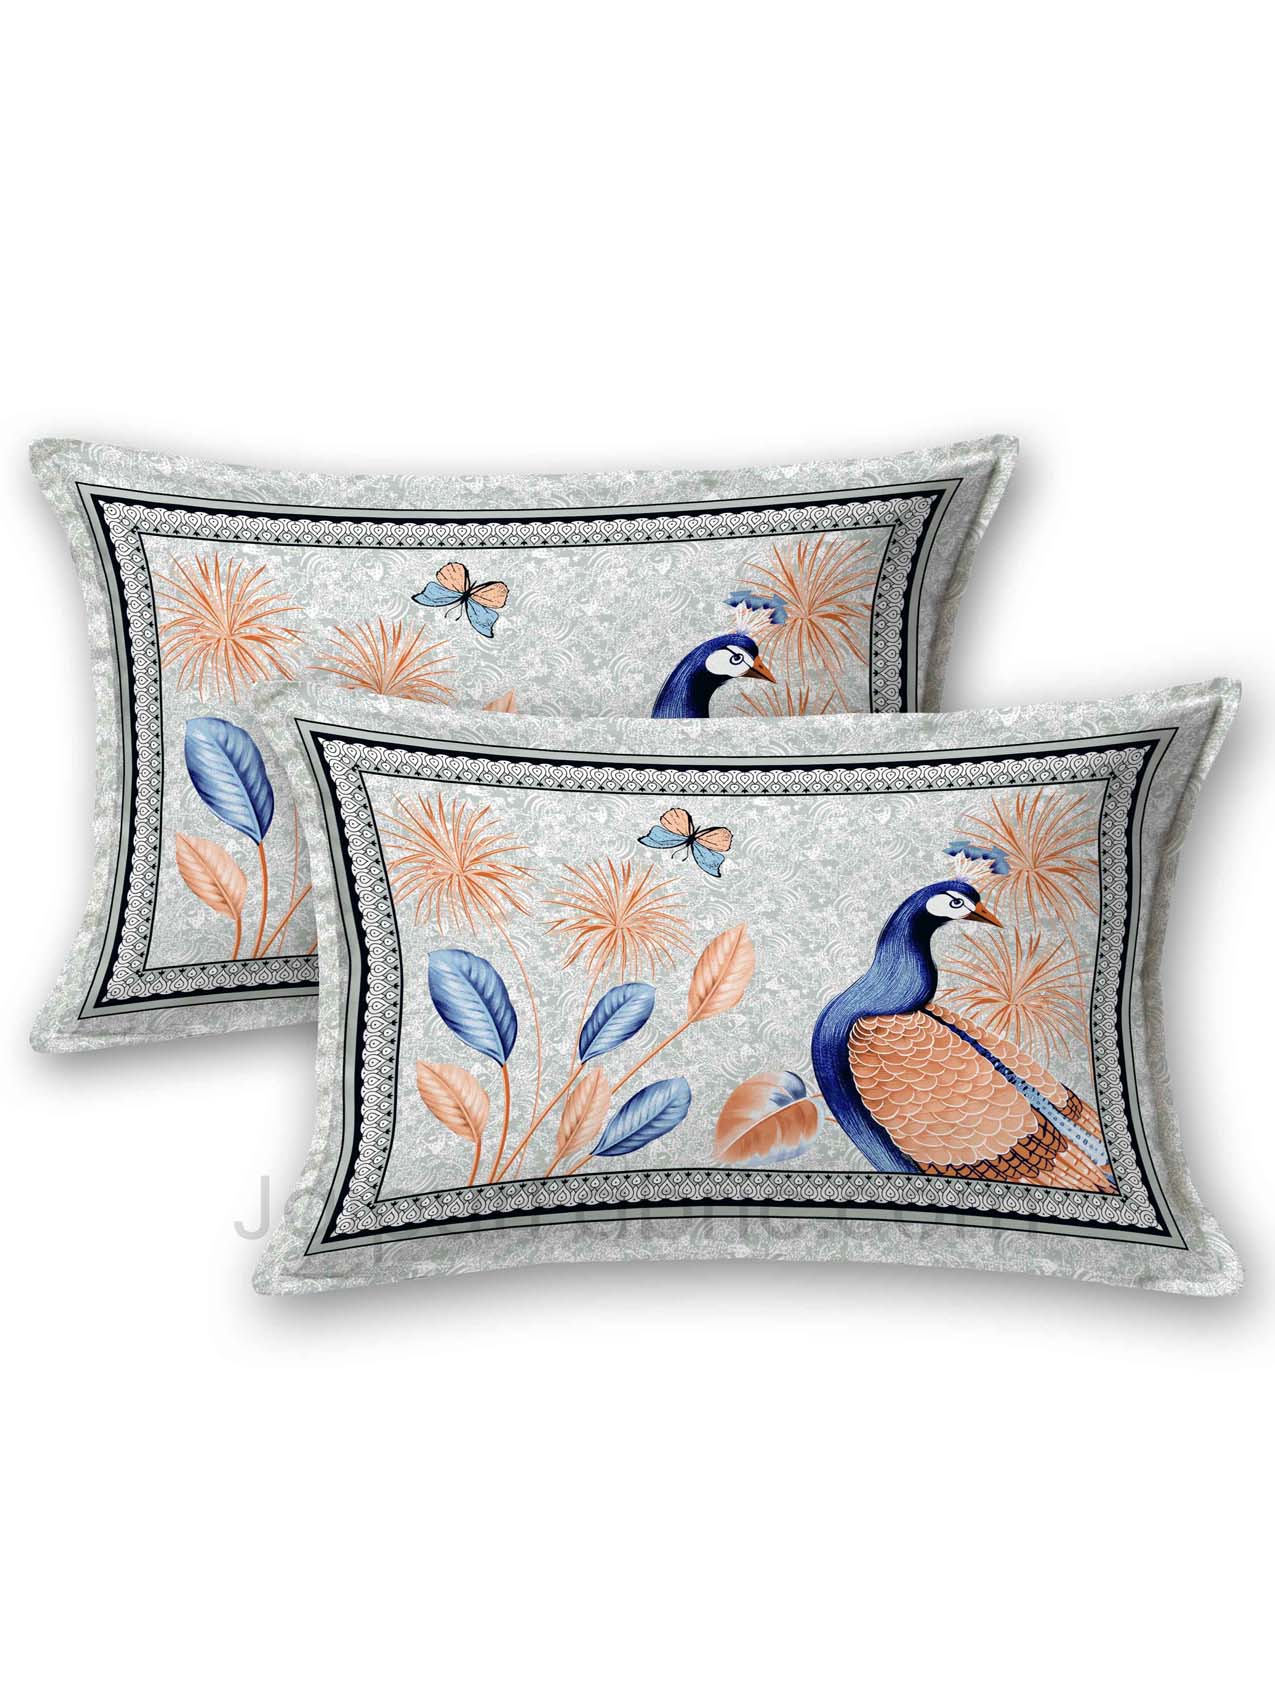 Peacock Blue Digital Print Luxury Cotton King Size Bedsheet